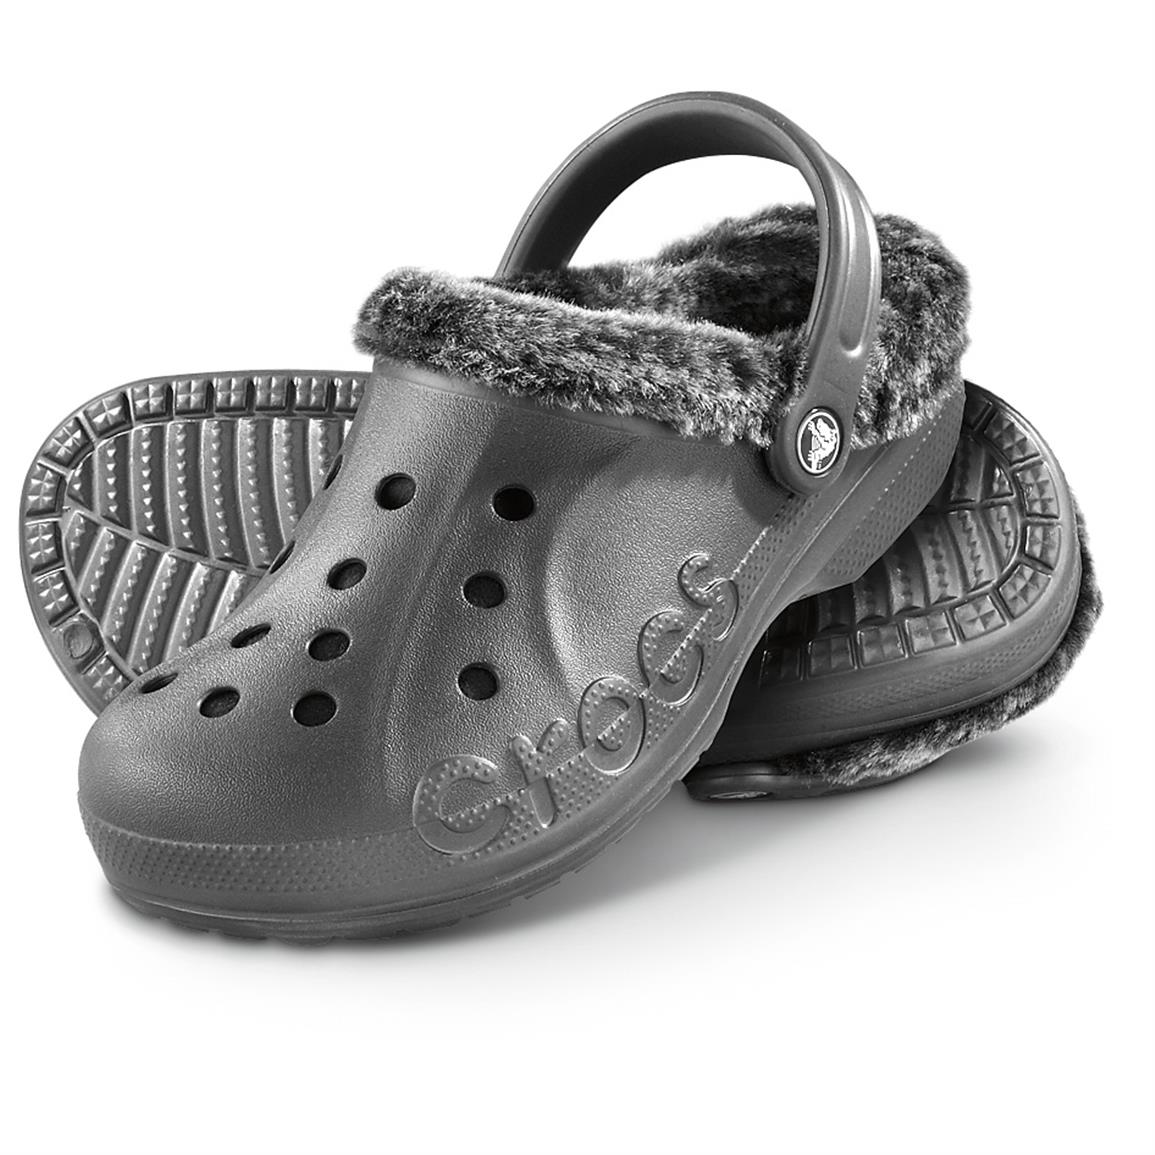  Crocs  Baya Heathered Lined Clogs  608581 Casual Shoes at 